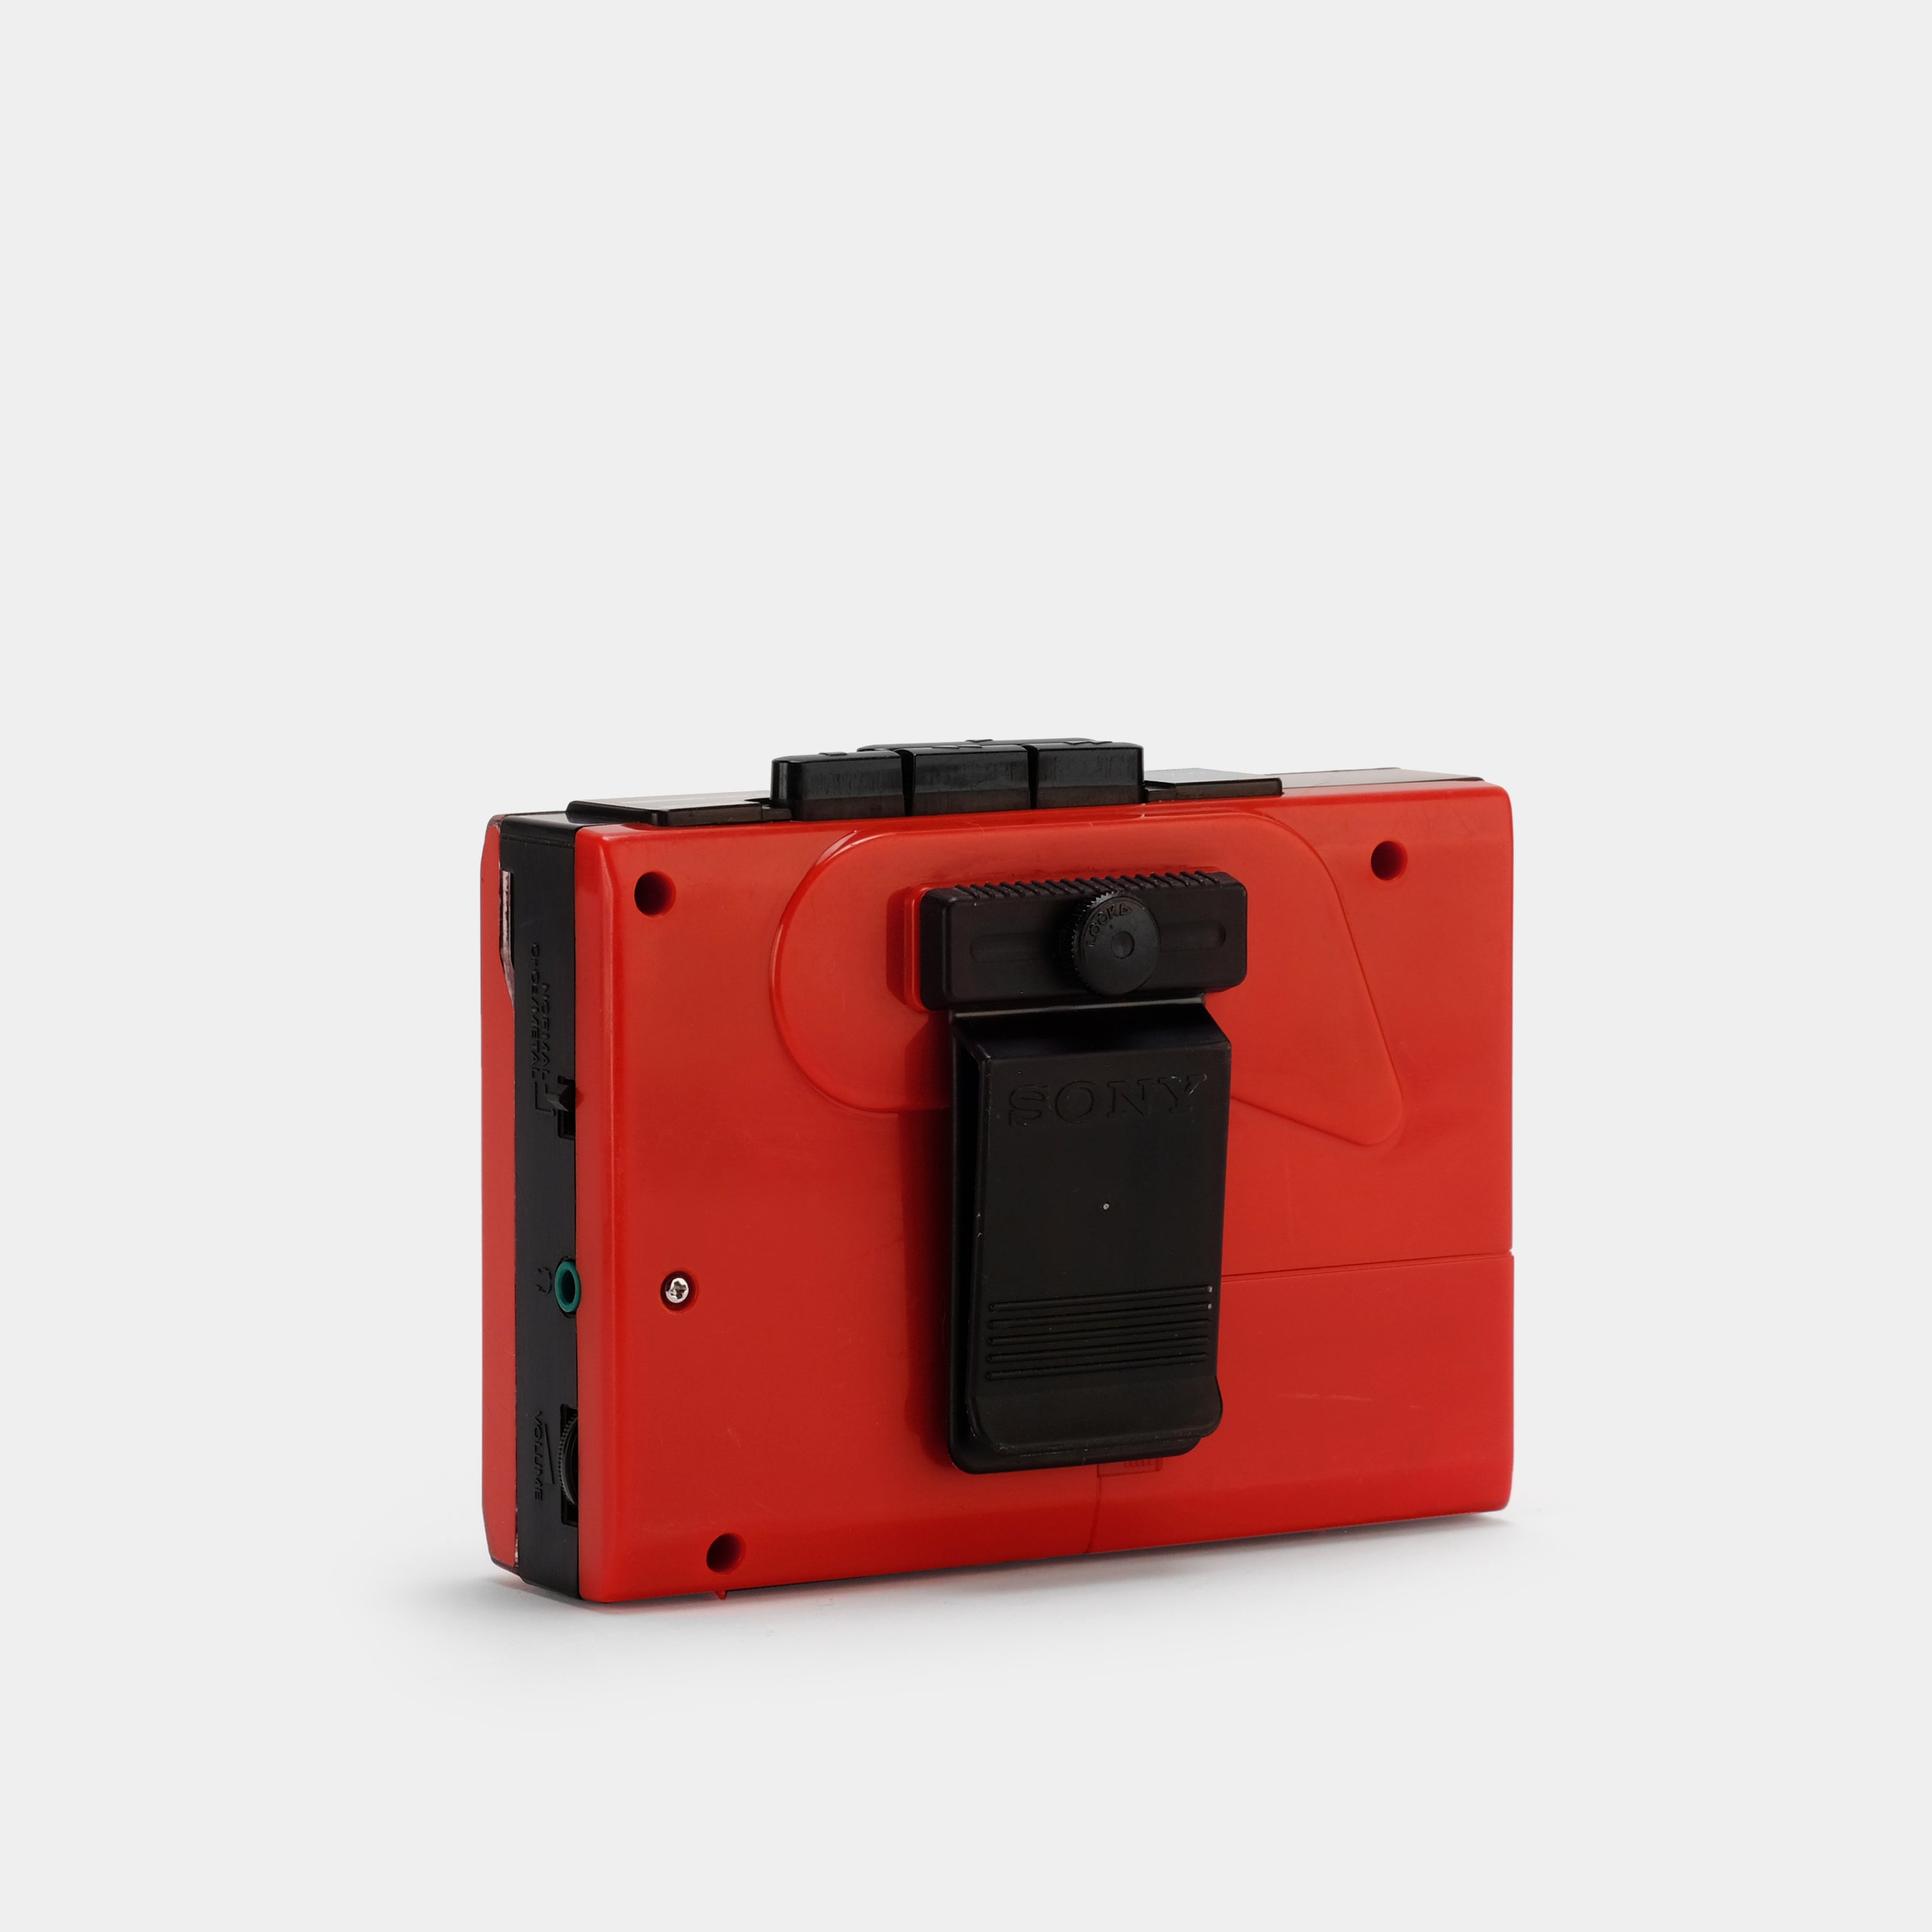 Sony Walkman WM-31 Red Portable Cassette Player